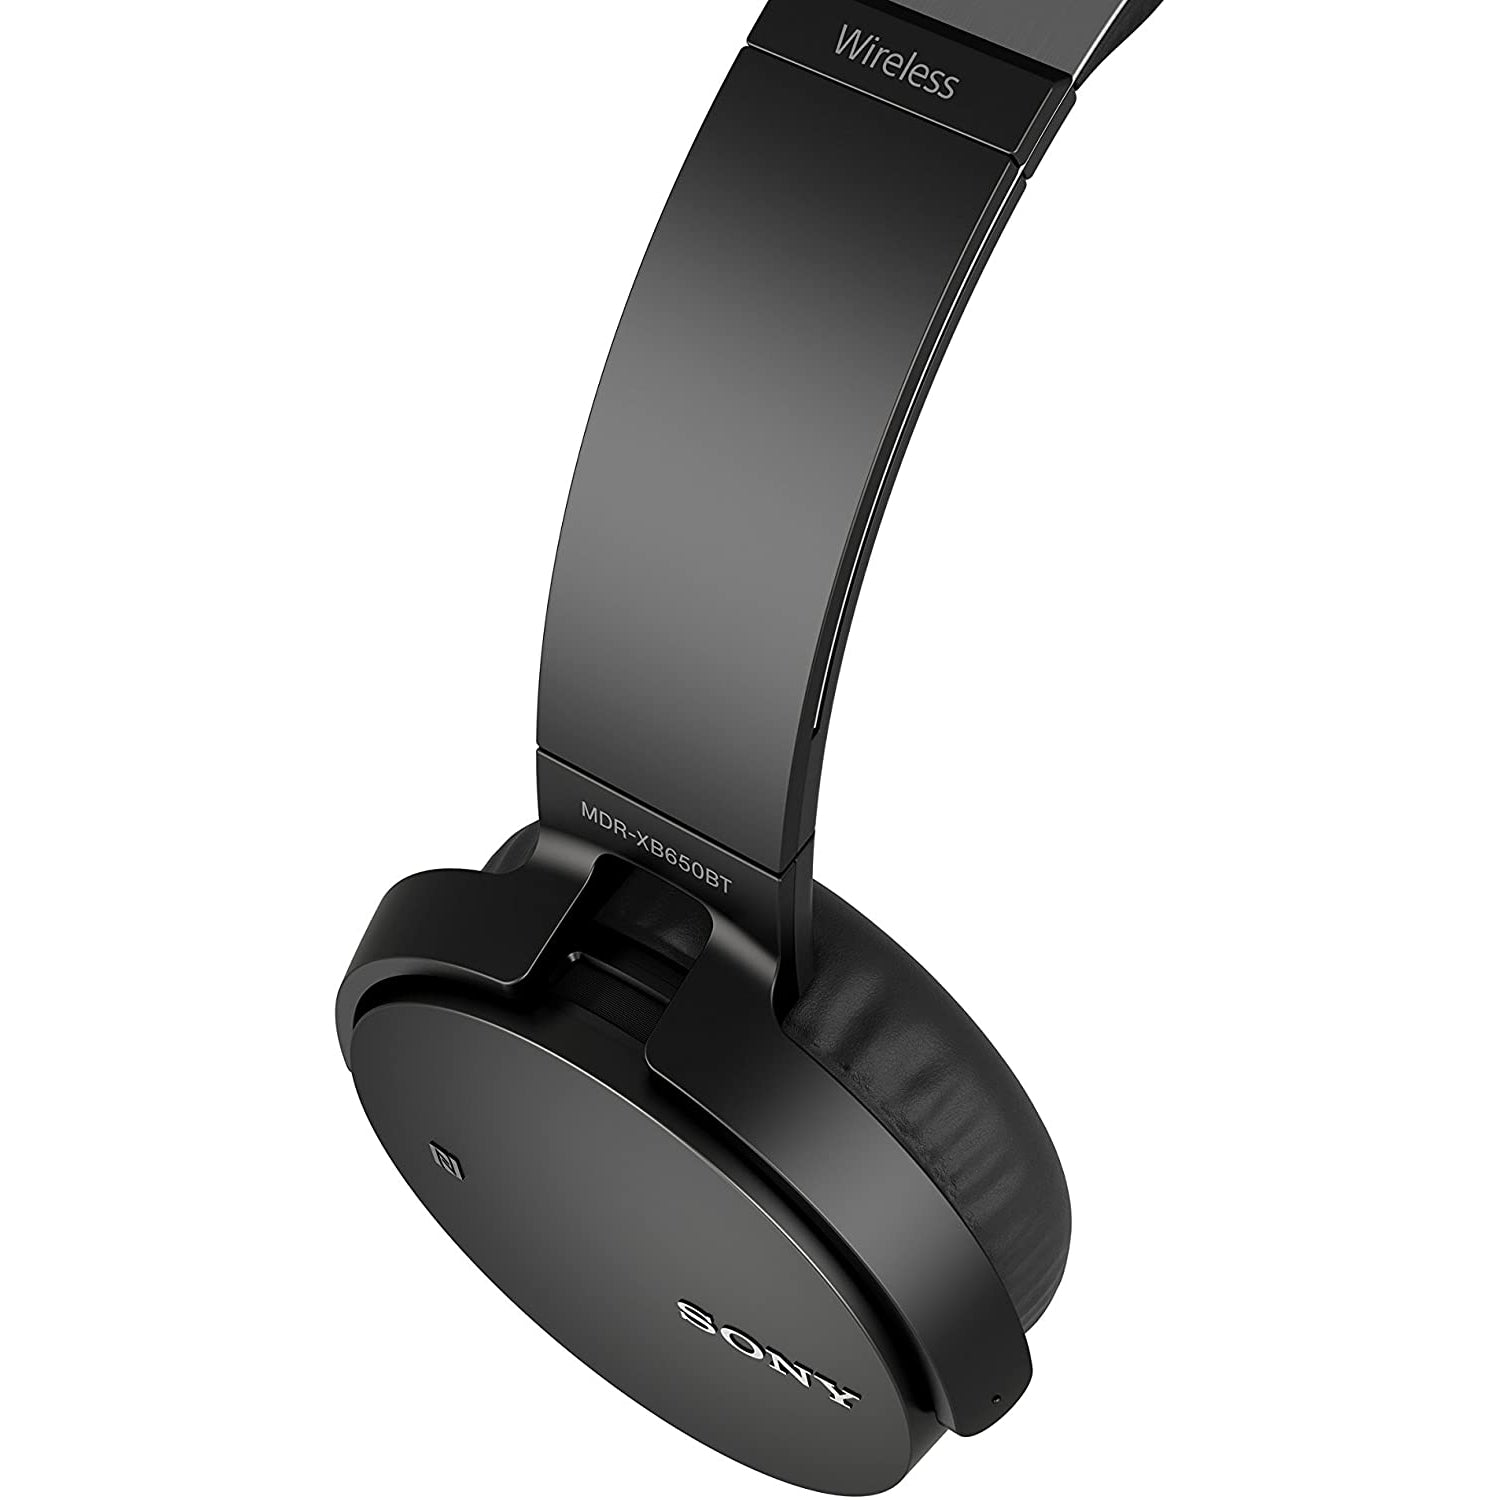 Sony MDRXB650BT Extra Bass Wireless on Ear Headphones - Black